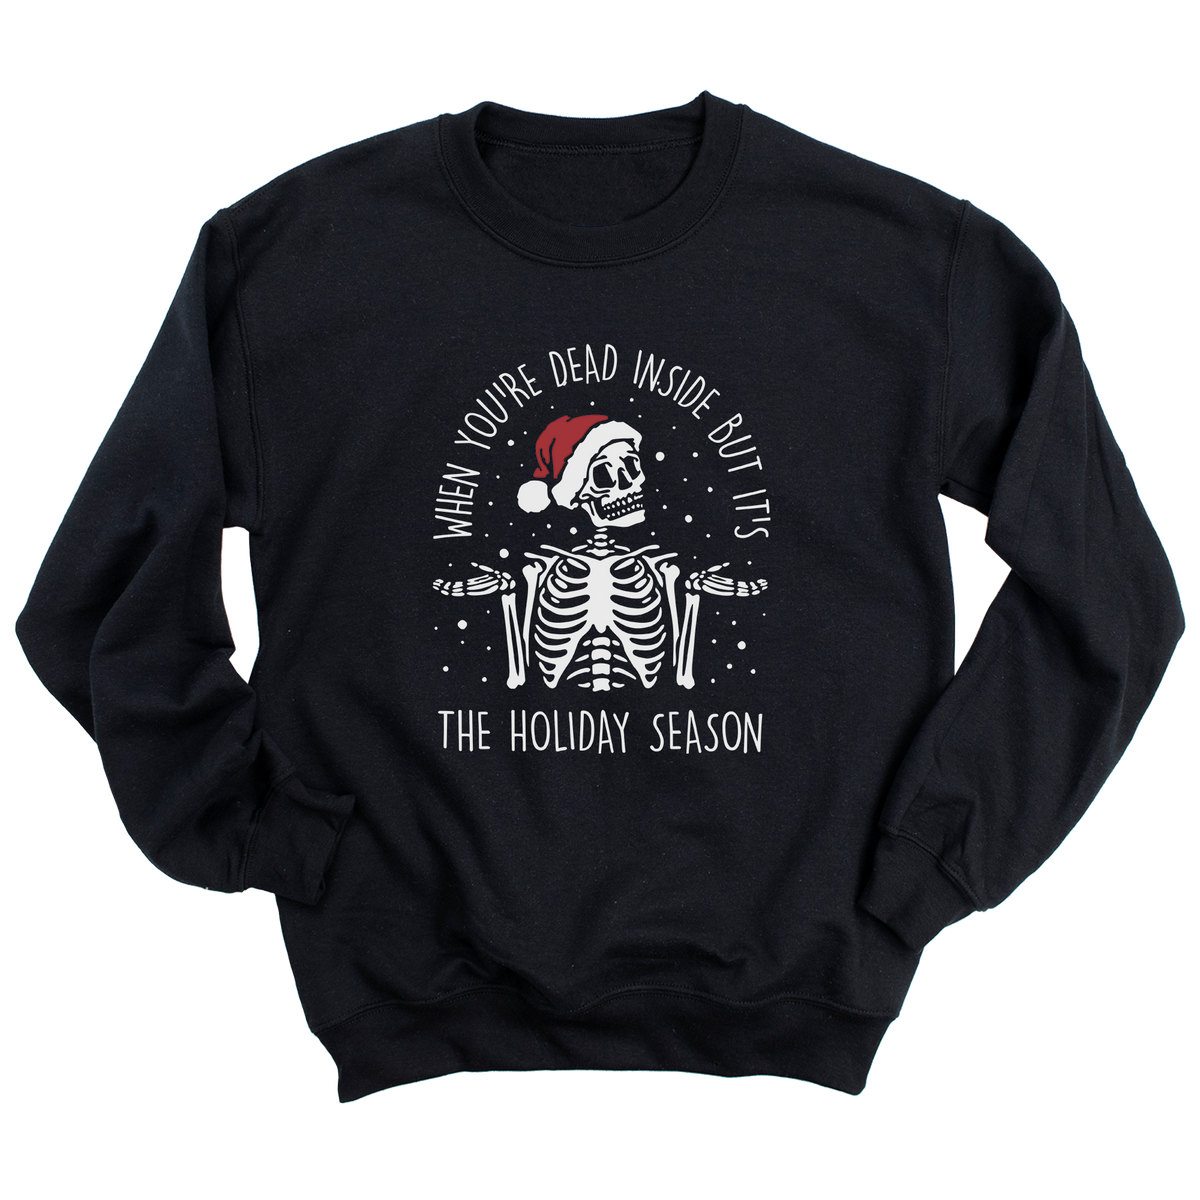 When You're Dead Inside But It's the Holiday Season Sweatshirt